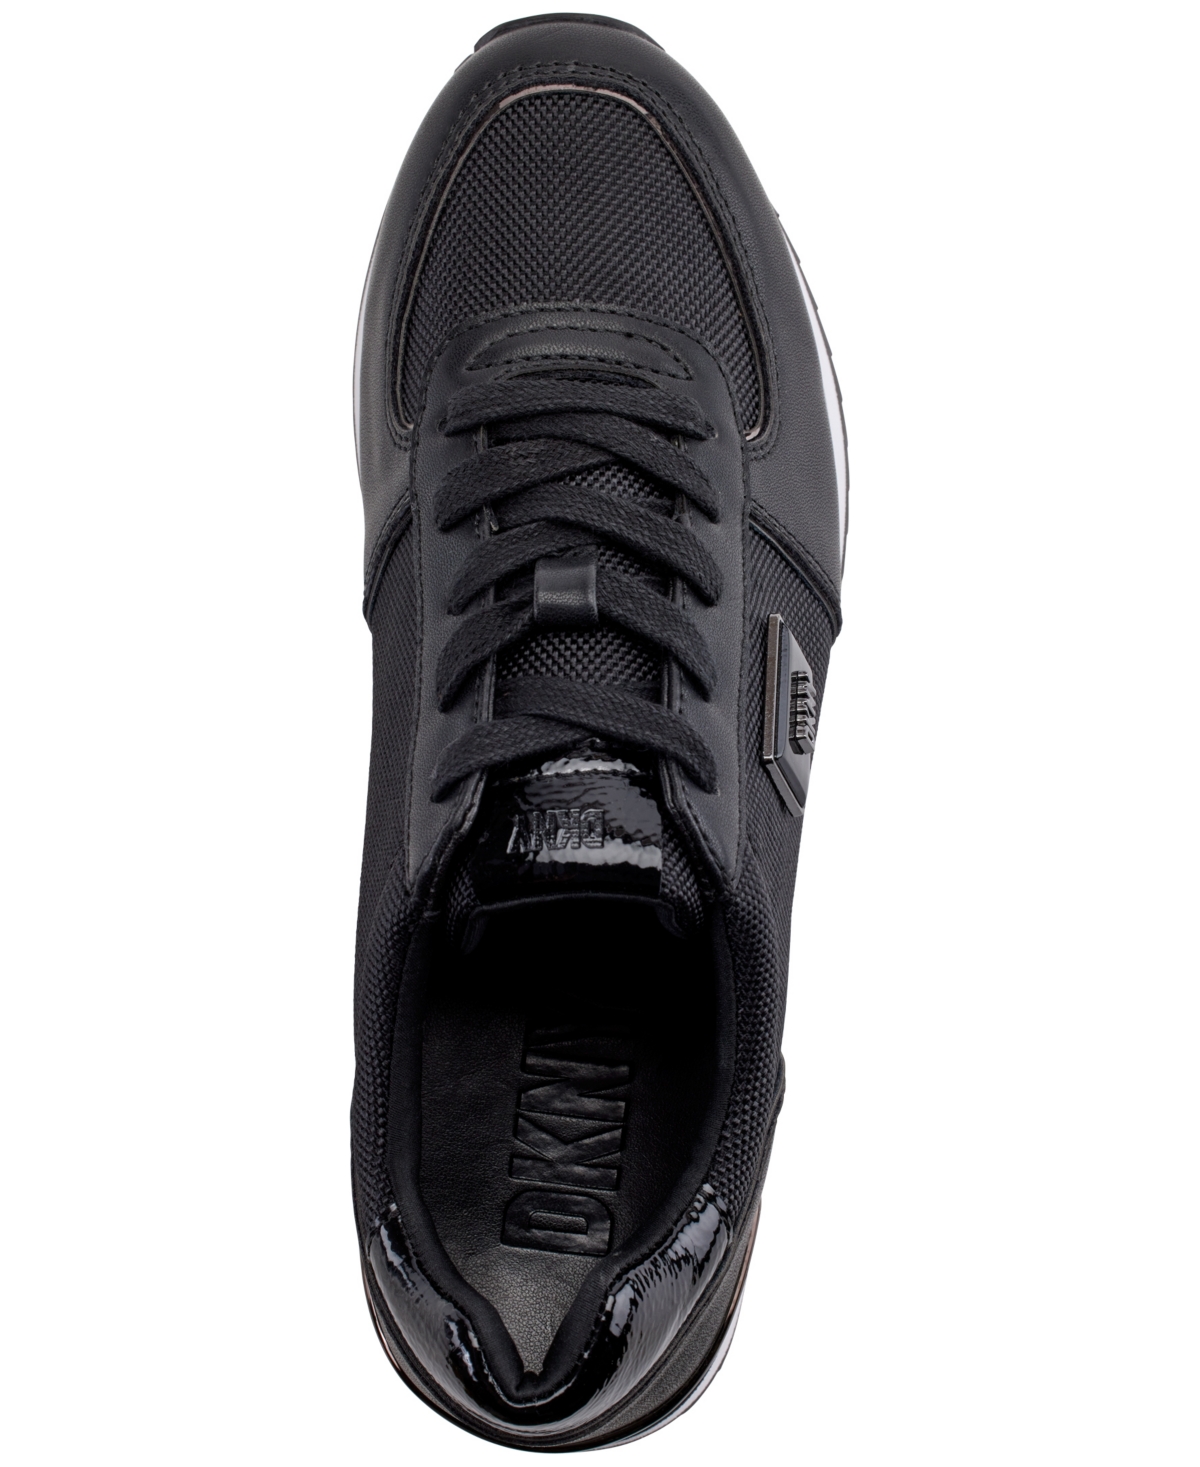 Shop Dkny Women's Davie Lace-up Platform Sneakers In Black